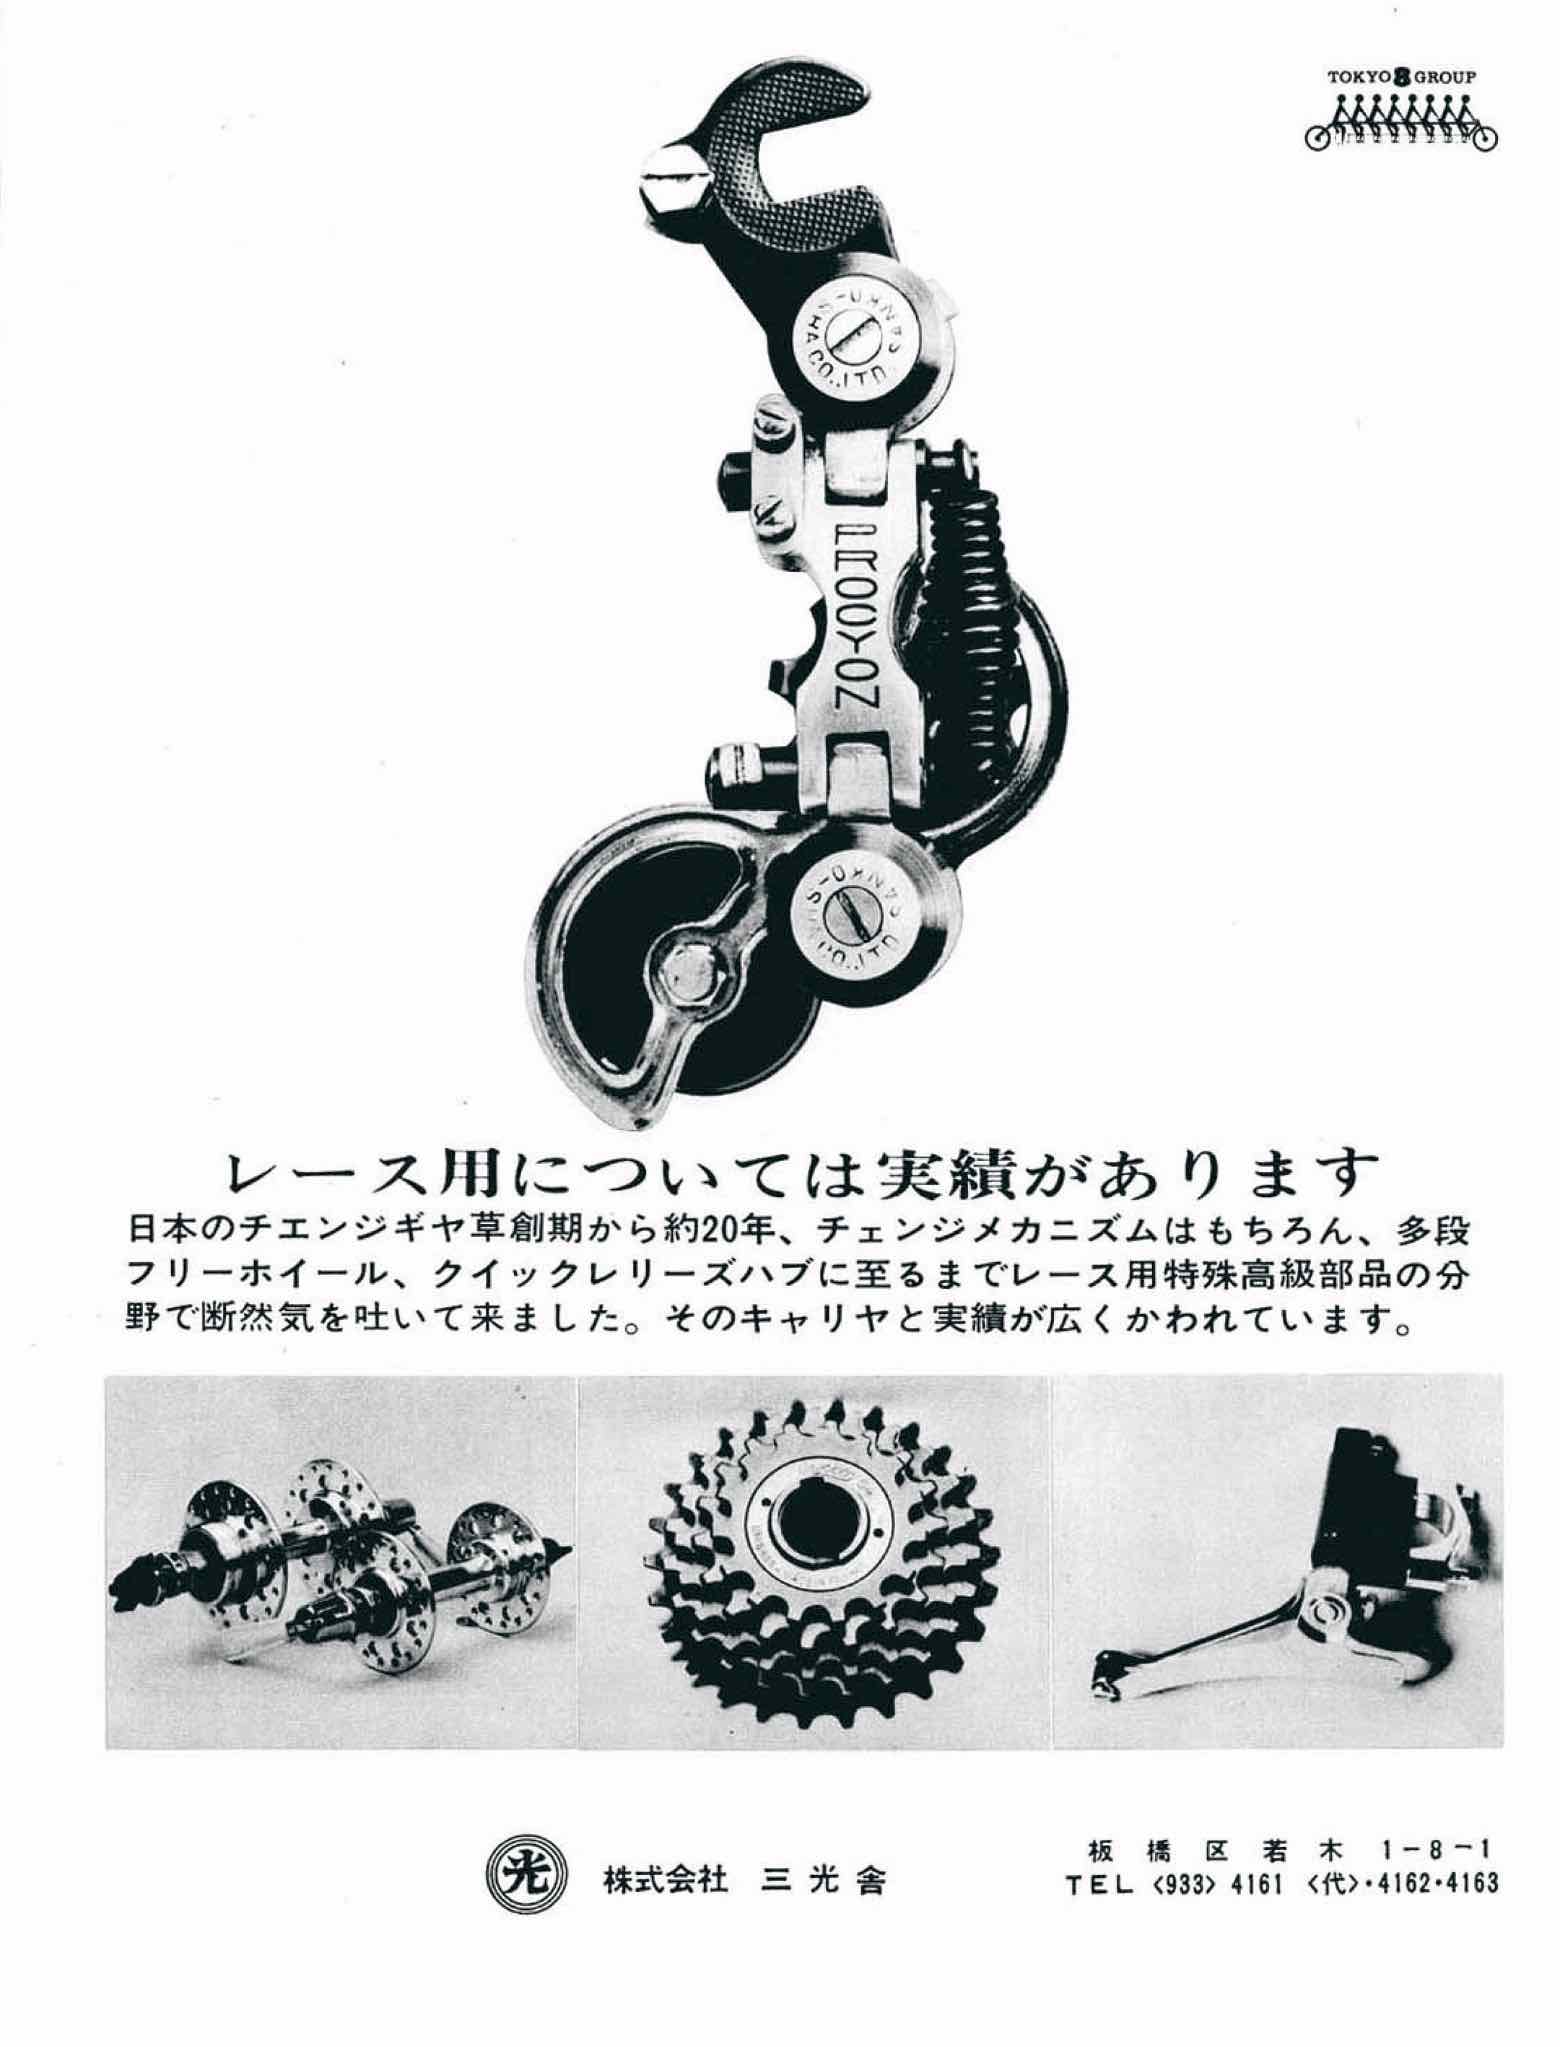 New Cycling September 1967 - Sanko advert main image